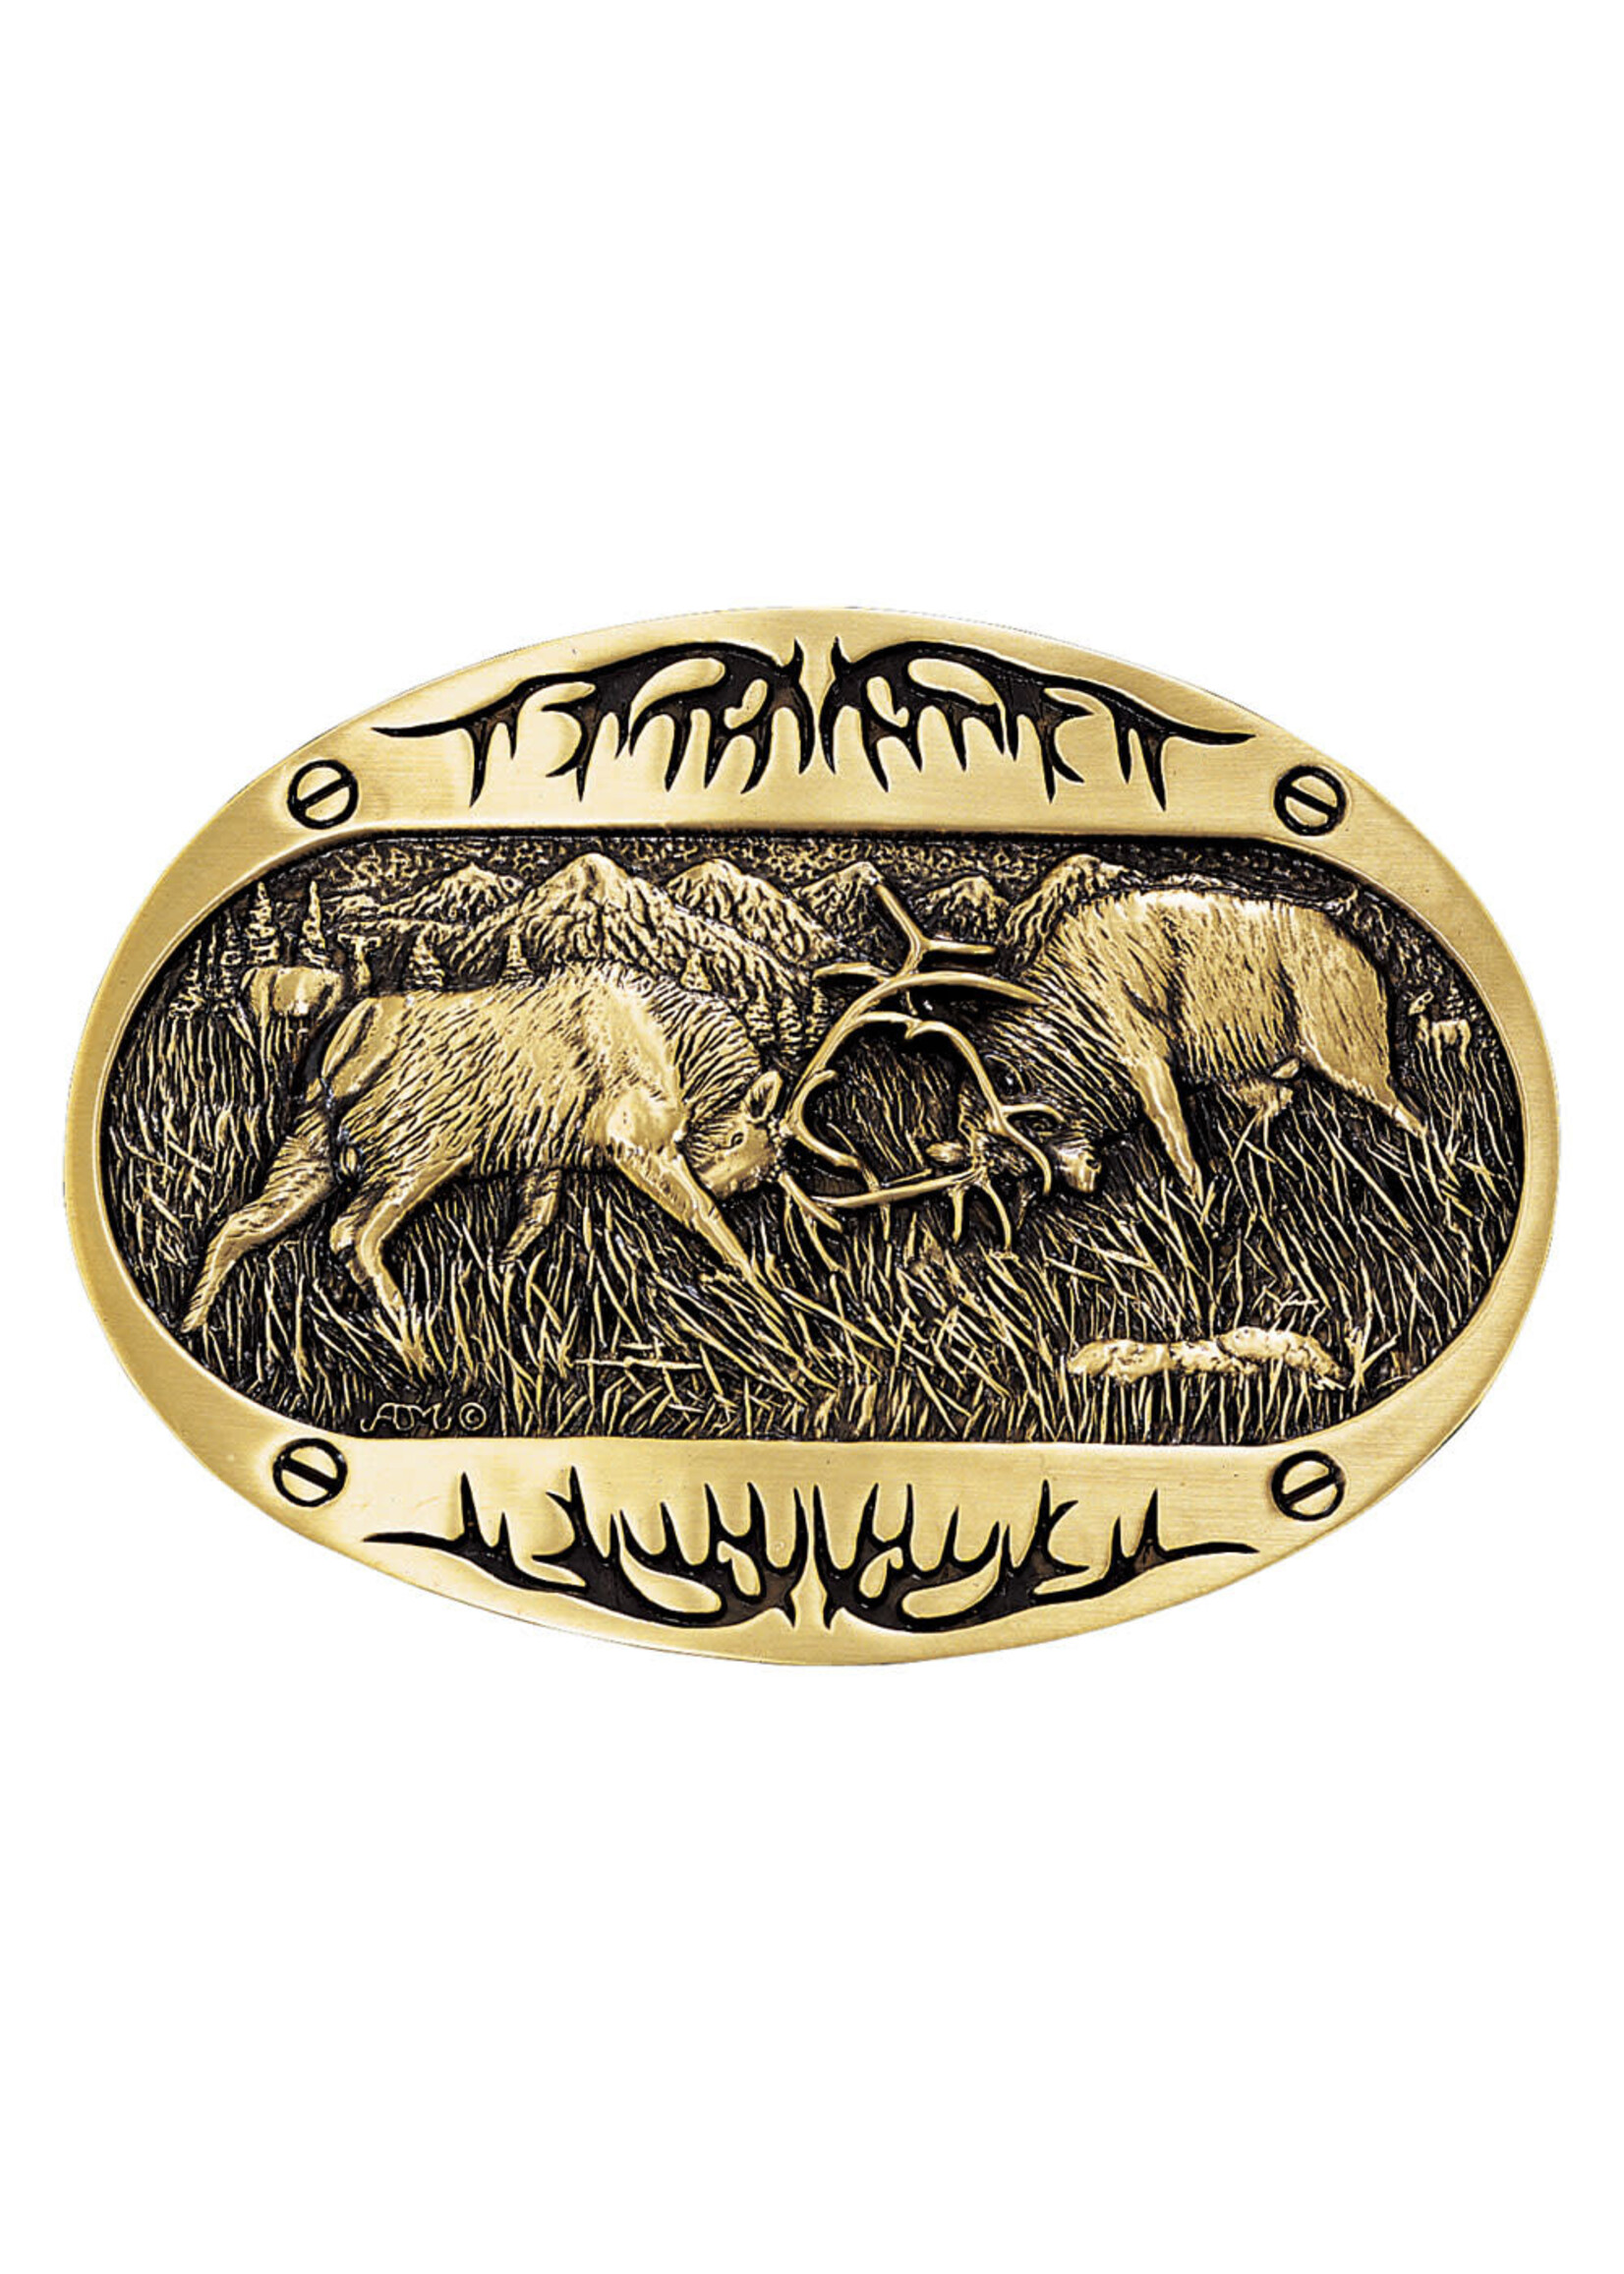 Attiude Buckles 60800C- Antique Brass - Fighting Elks